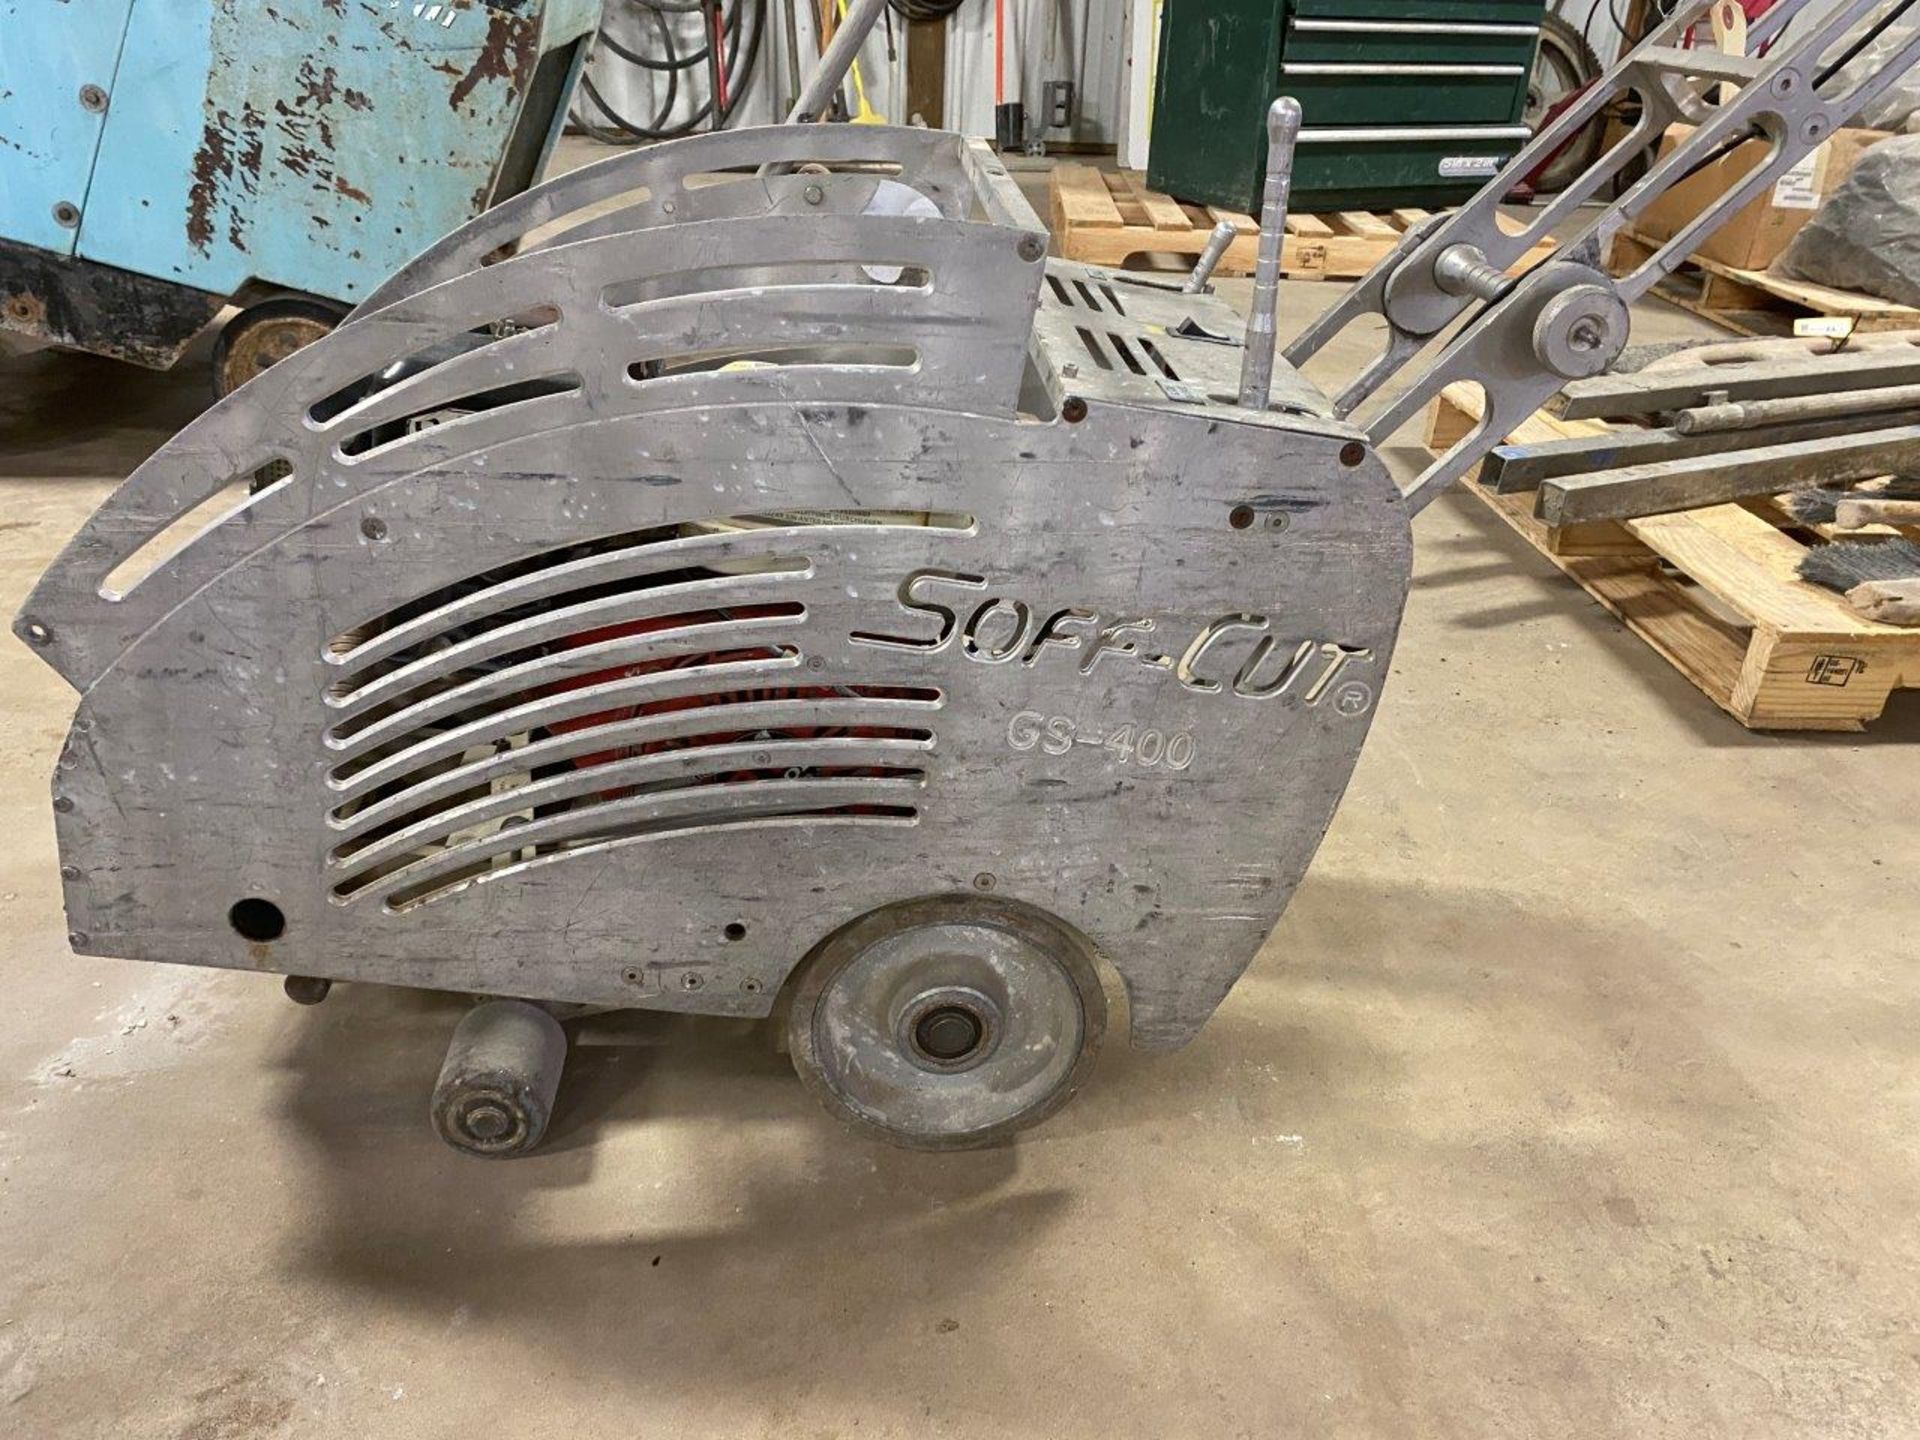 Soff Cut concrete saw, model DS 400, SN 1040, Honda gas powered engine, manual start, manual - Image 4 of 6